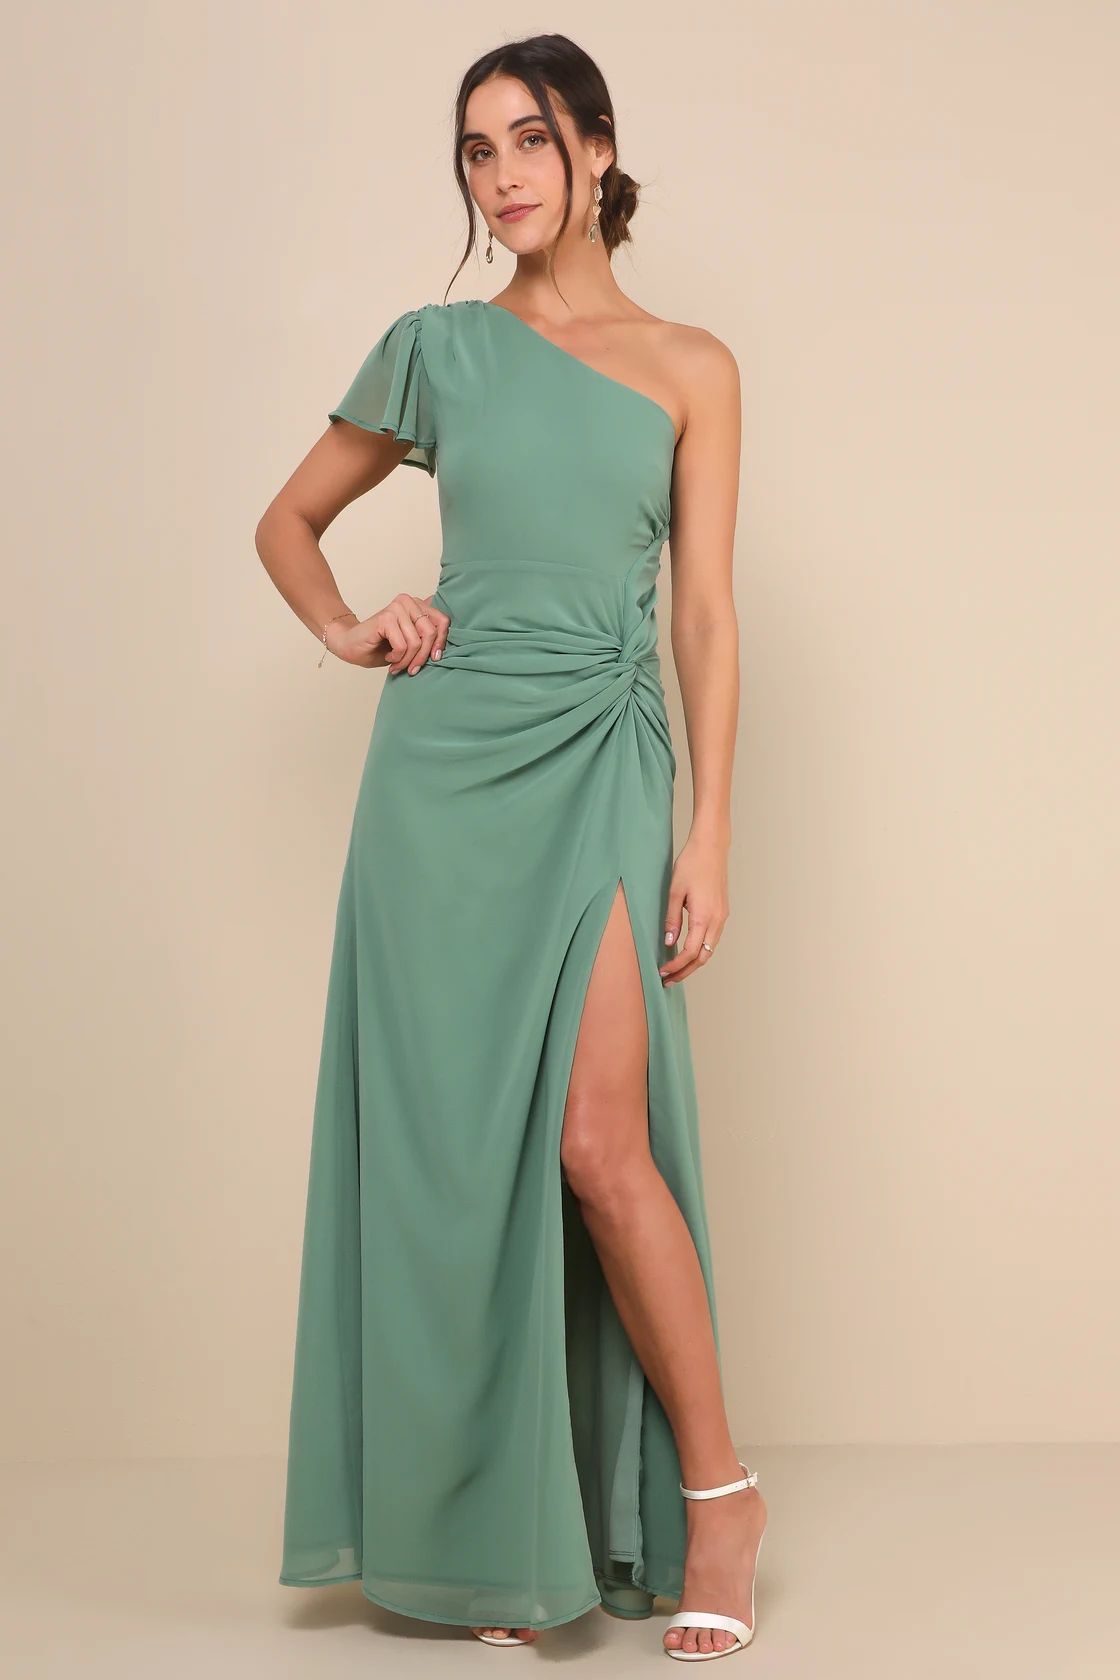 Loving Twist Sage Green One-Shoulder Twist-Front Maxi Dress | Lulus